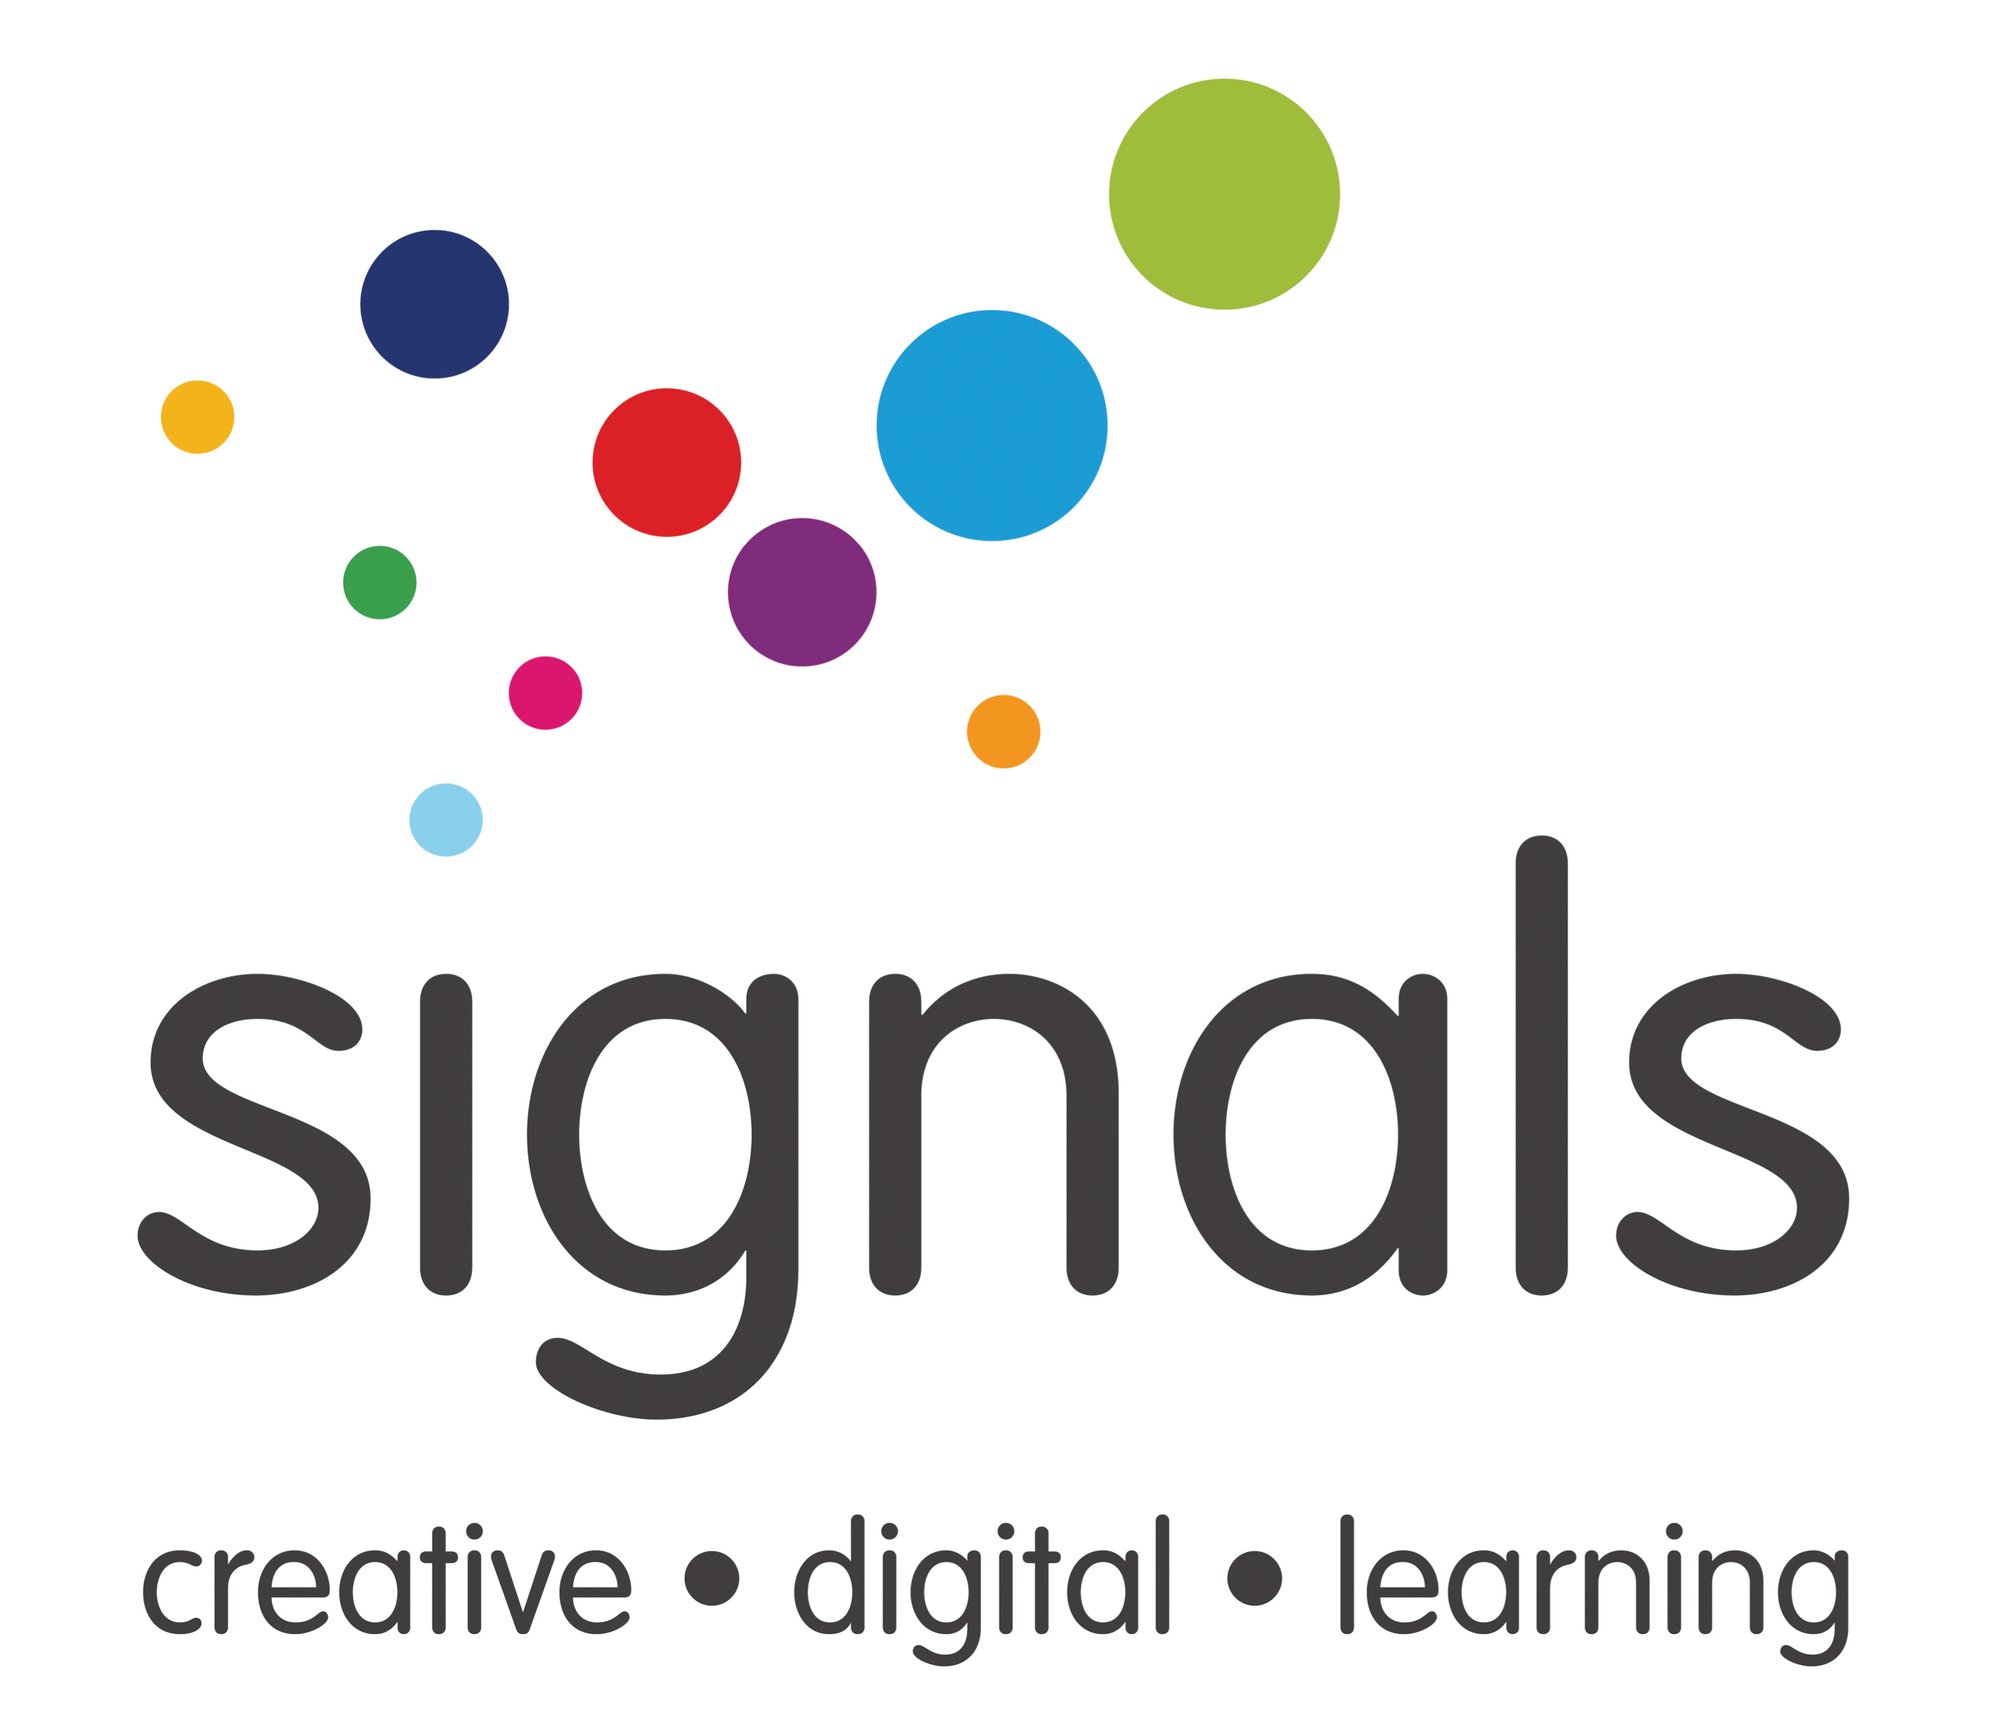 Signals logo - creative. Digital. Learning.